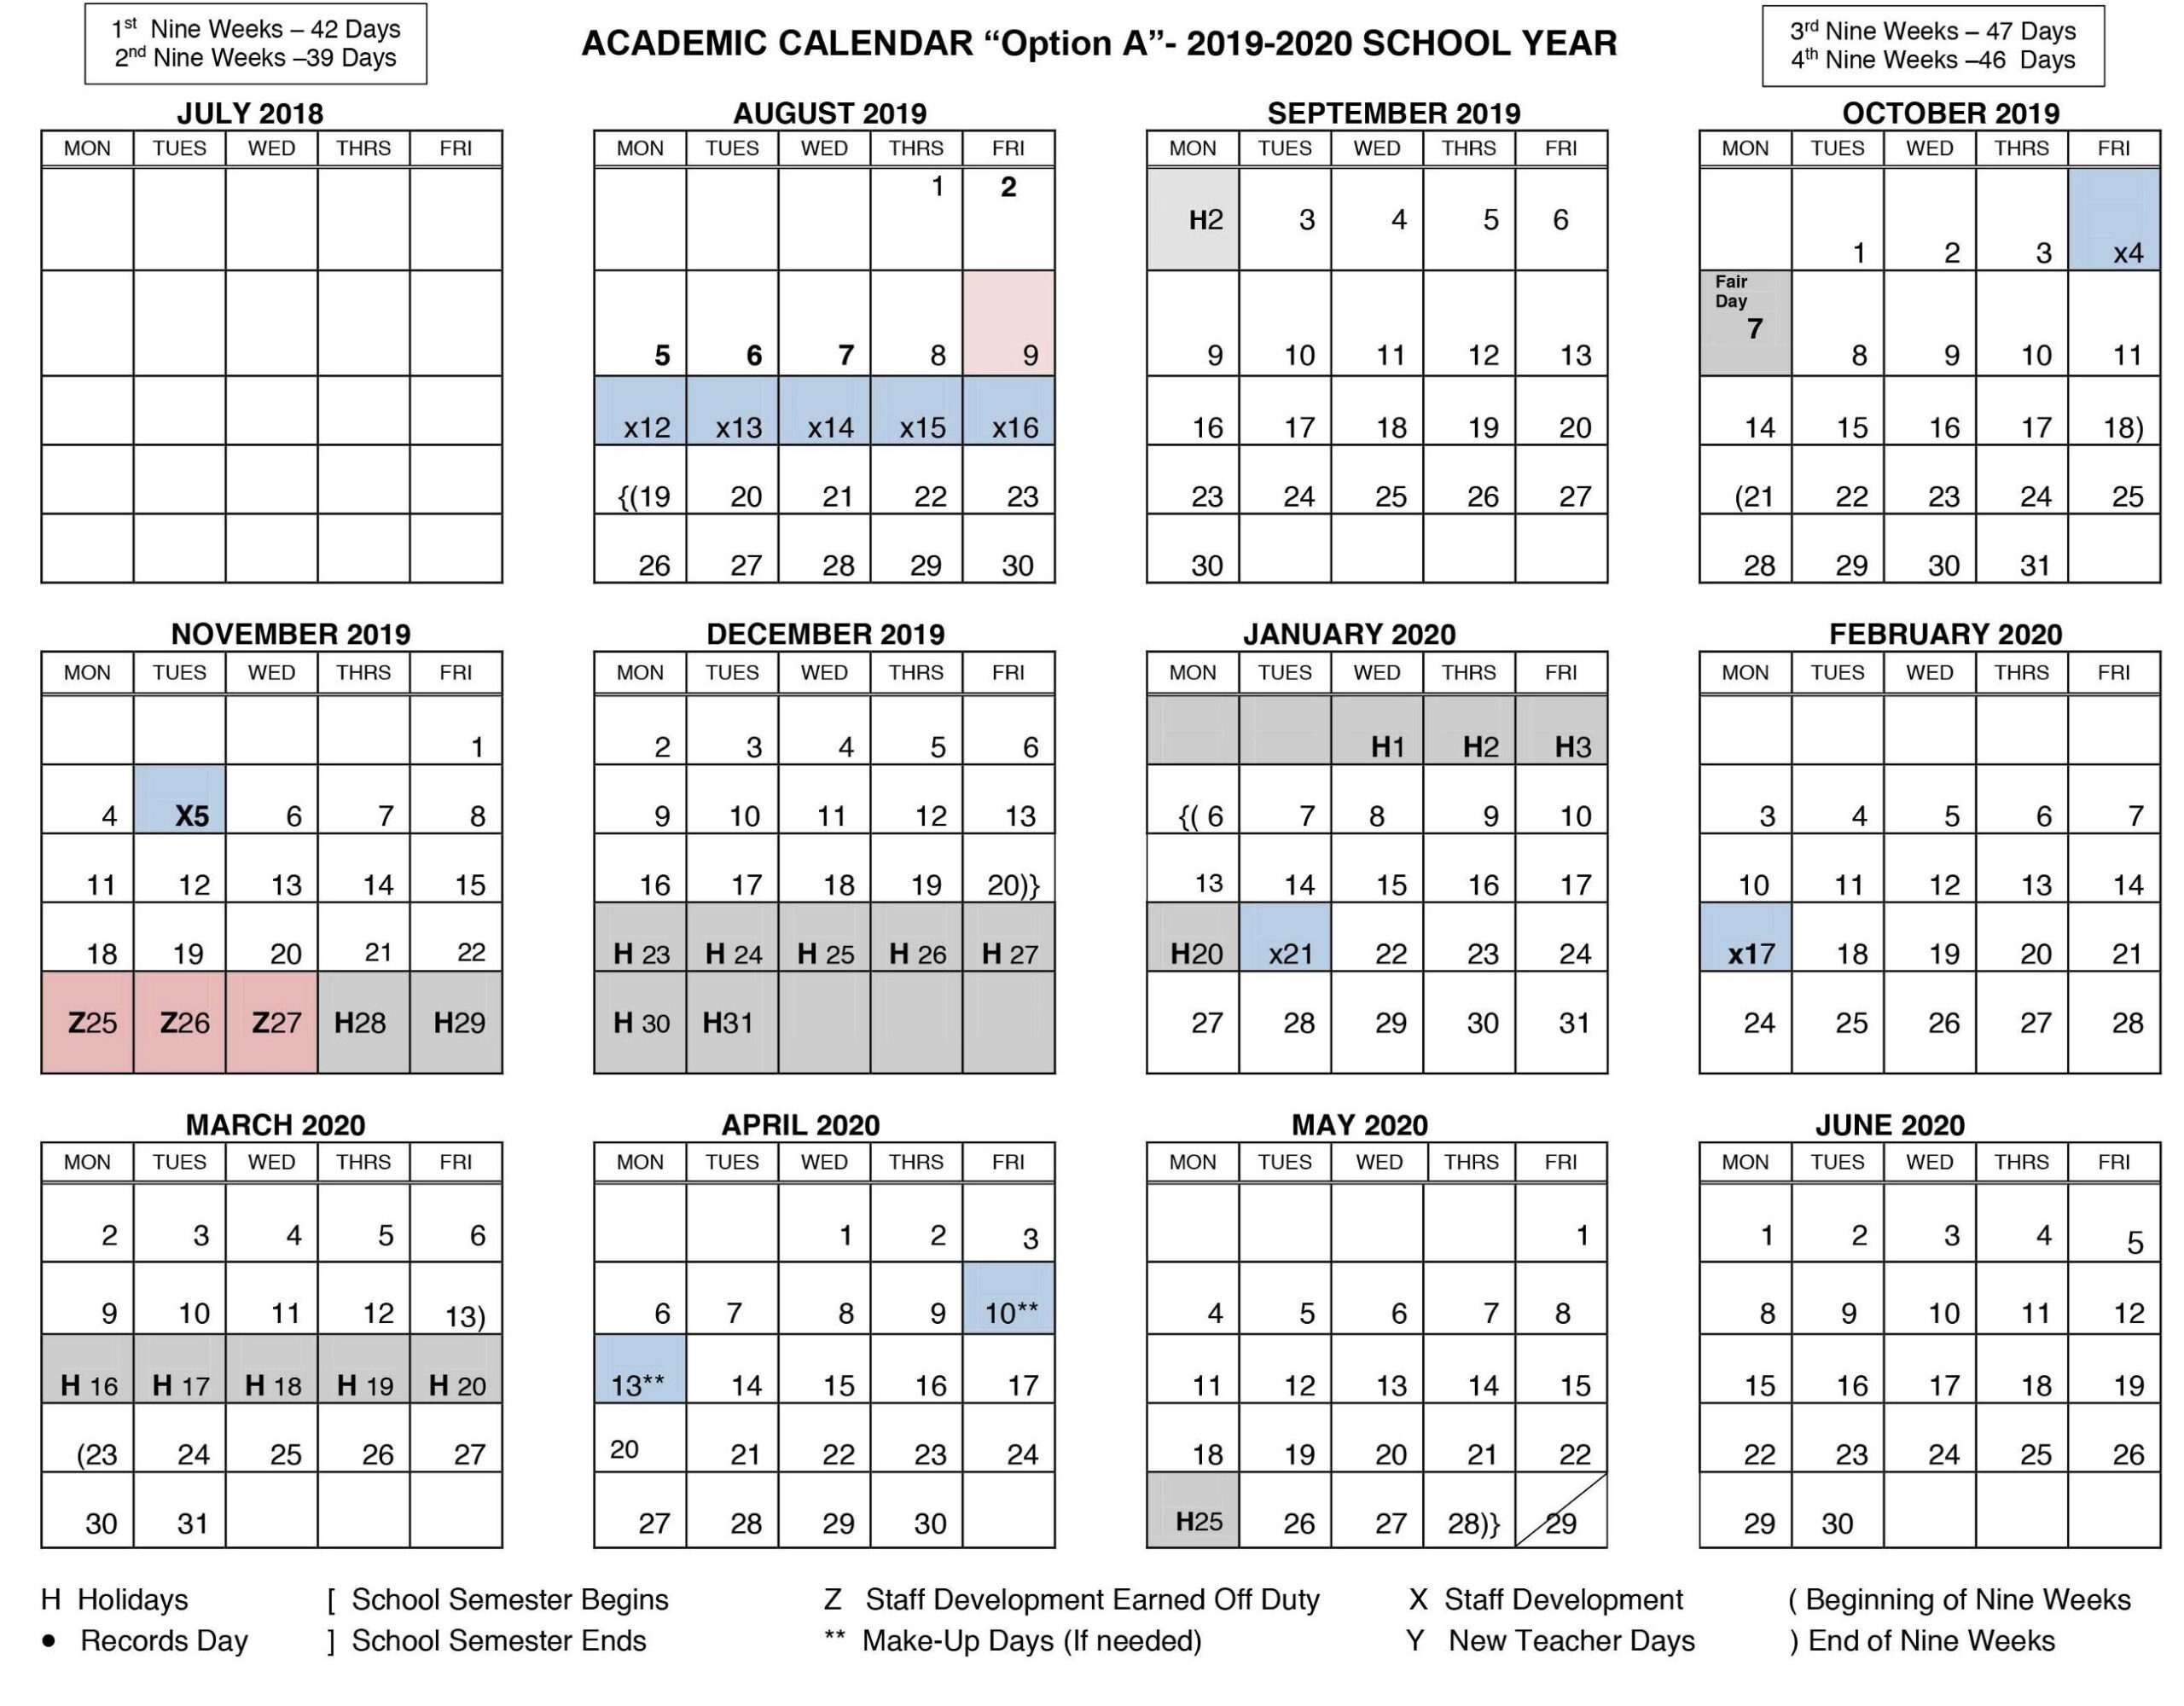 school-district-of-philadelphia-calendar-2022-19-2023-schoolcalendars